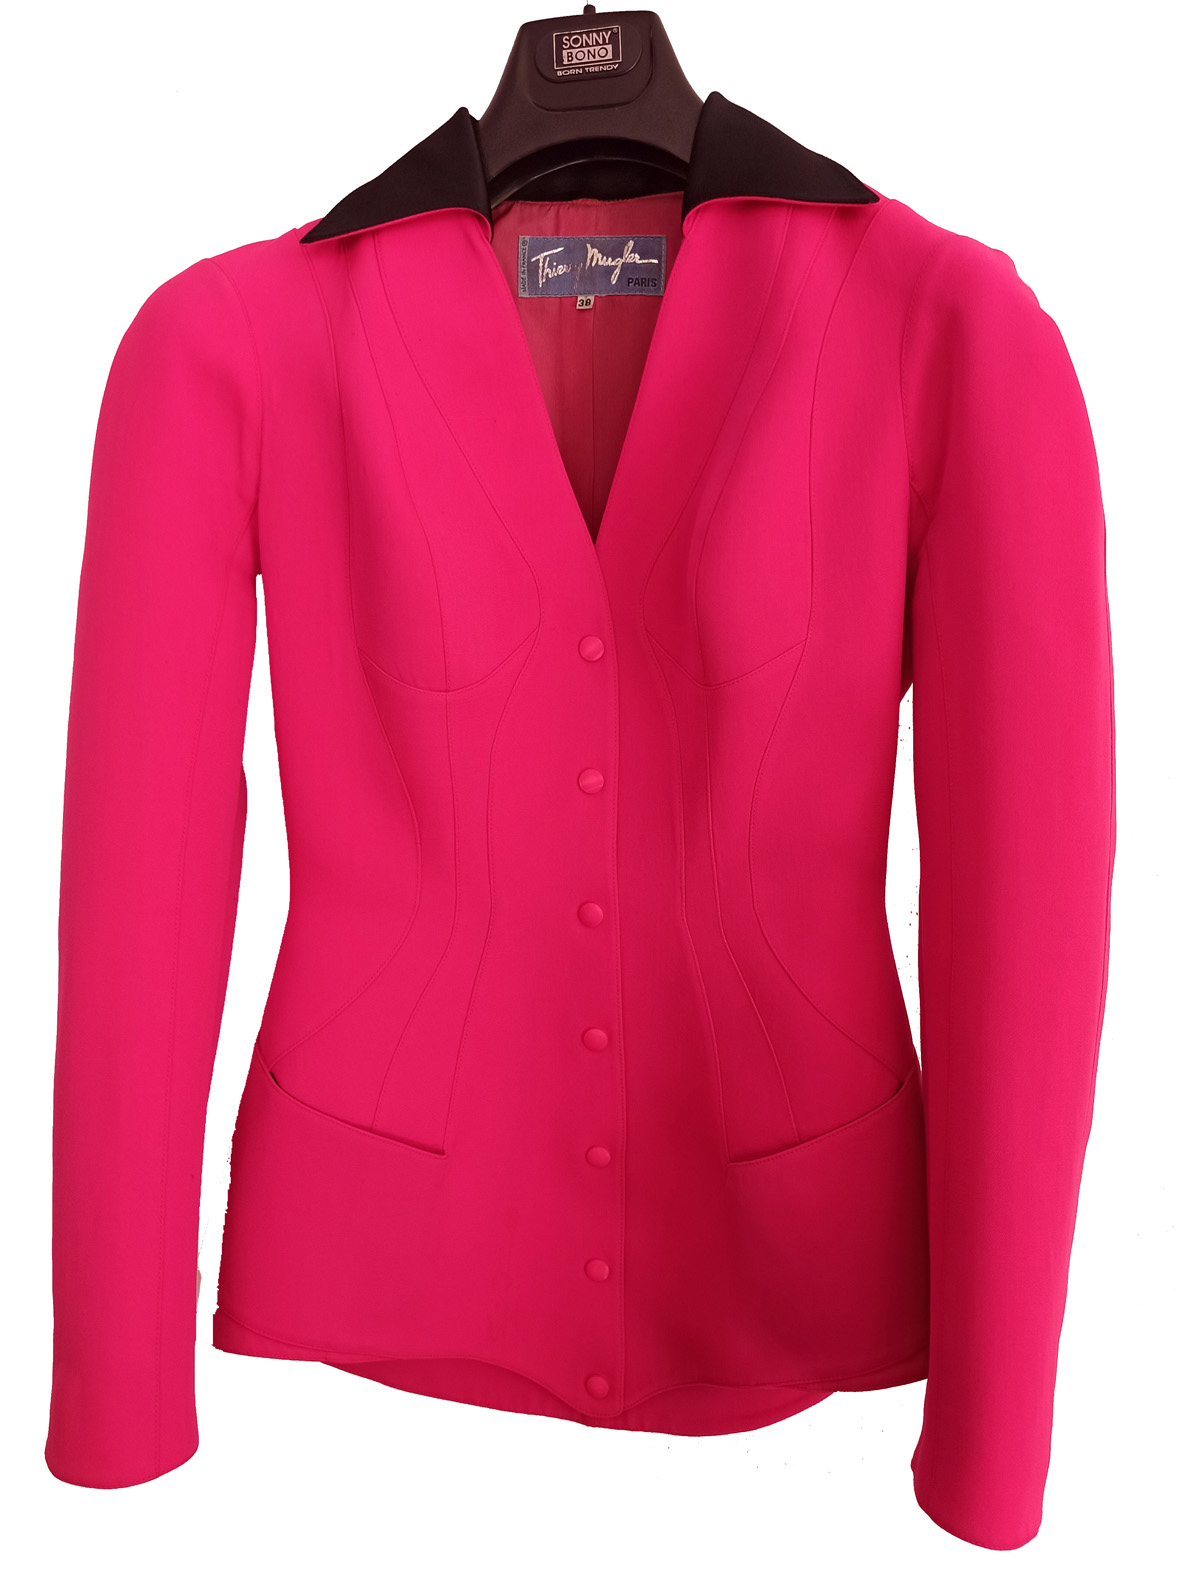 Tierry Mudler designer Pink Jacket